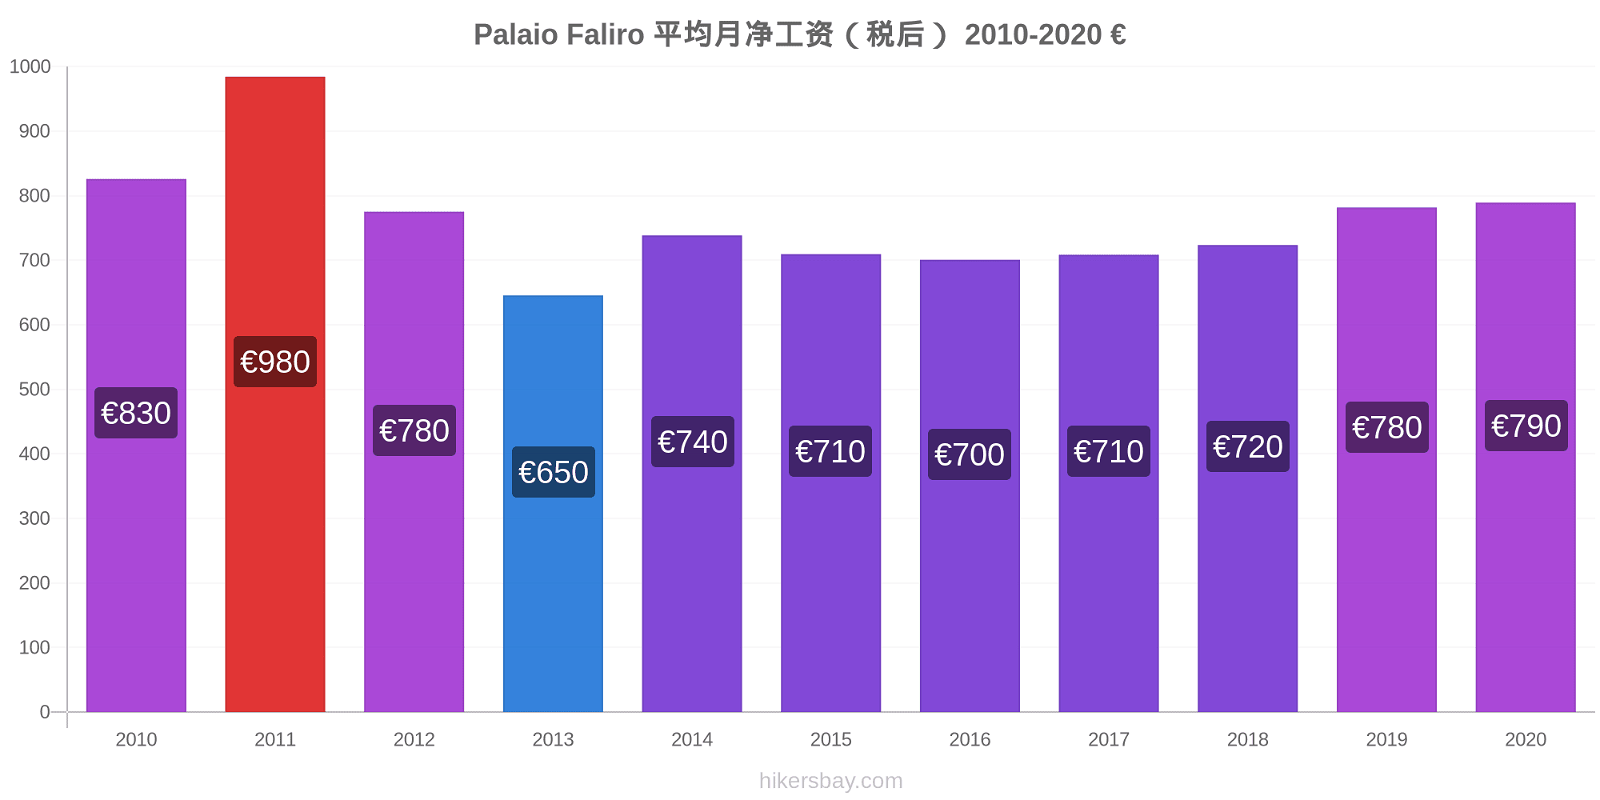 Palaio Faliro 价格变化 平均每月净工资 （后税） hikersbay.com